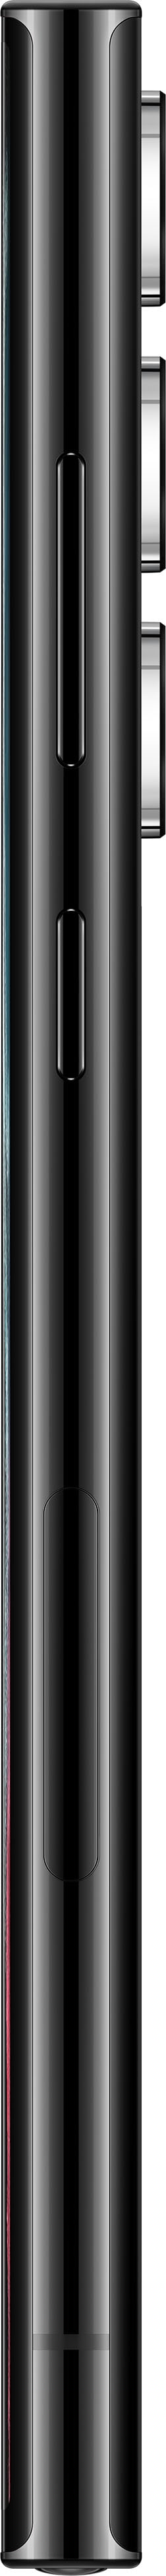 Samsung - Galaxy S22 Ultra 512GB - Phantom Black (AT&T)_5